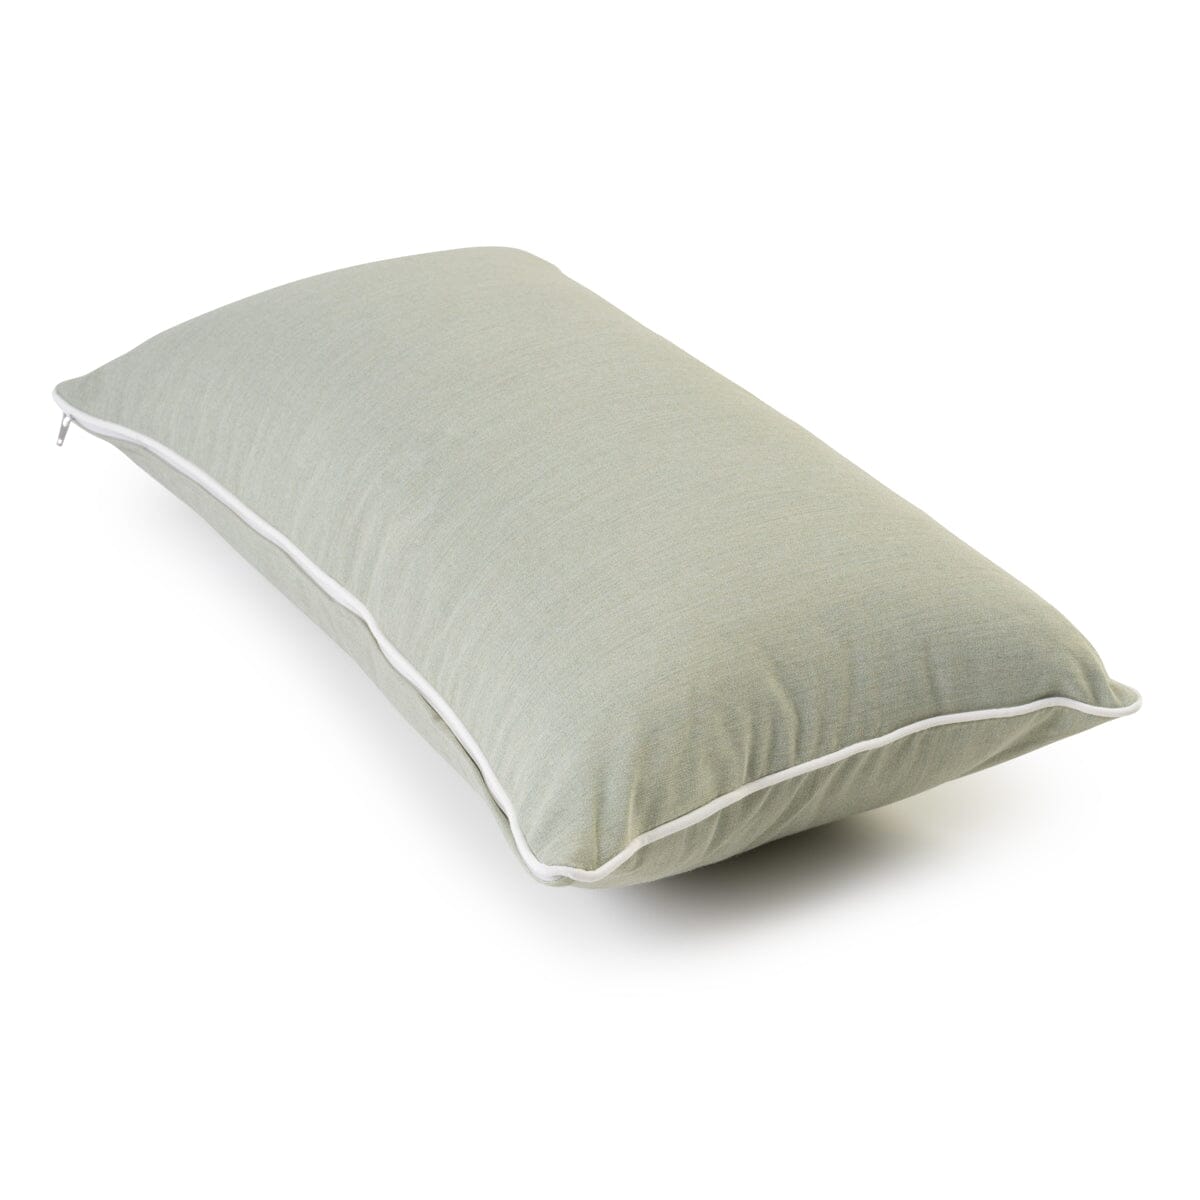 Studio image of green rectangle throw pillow